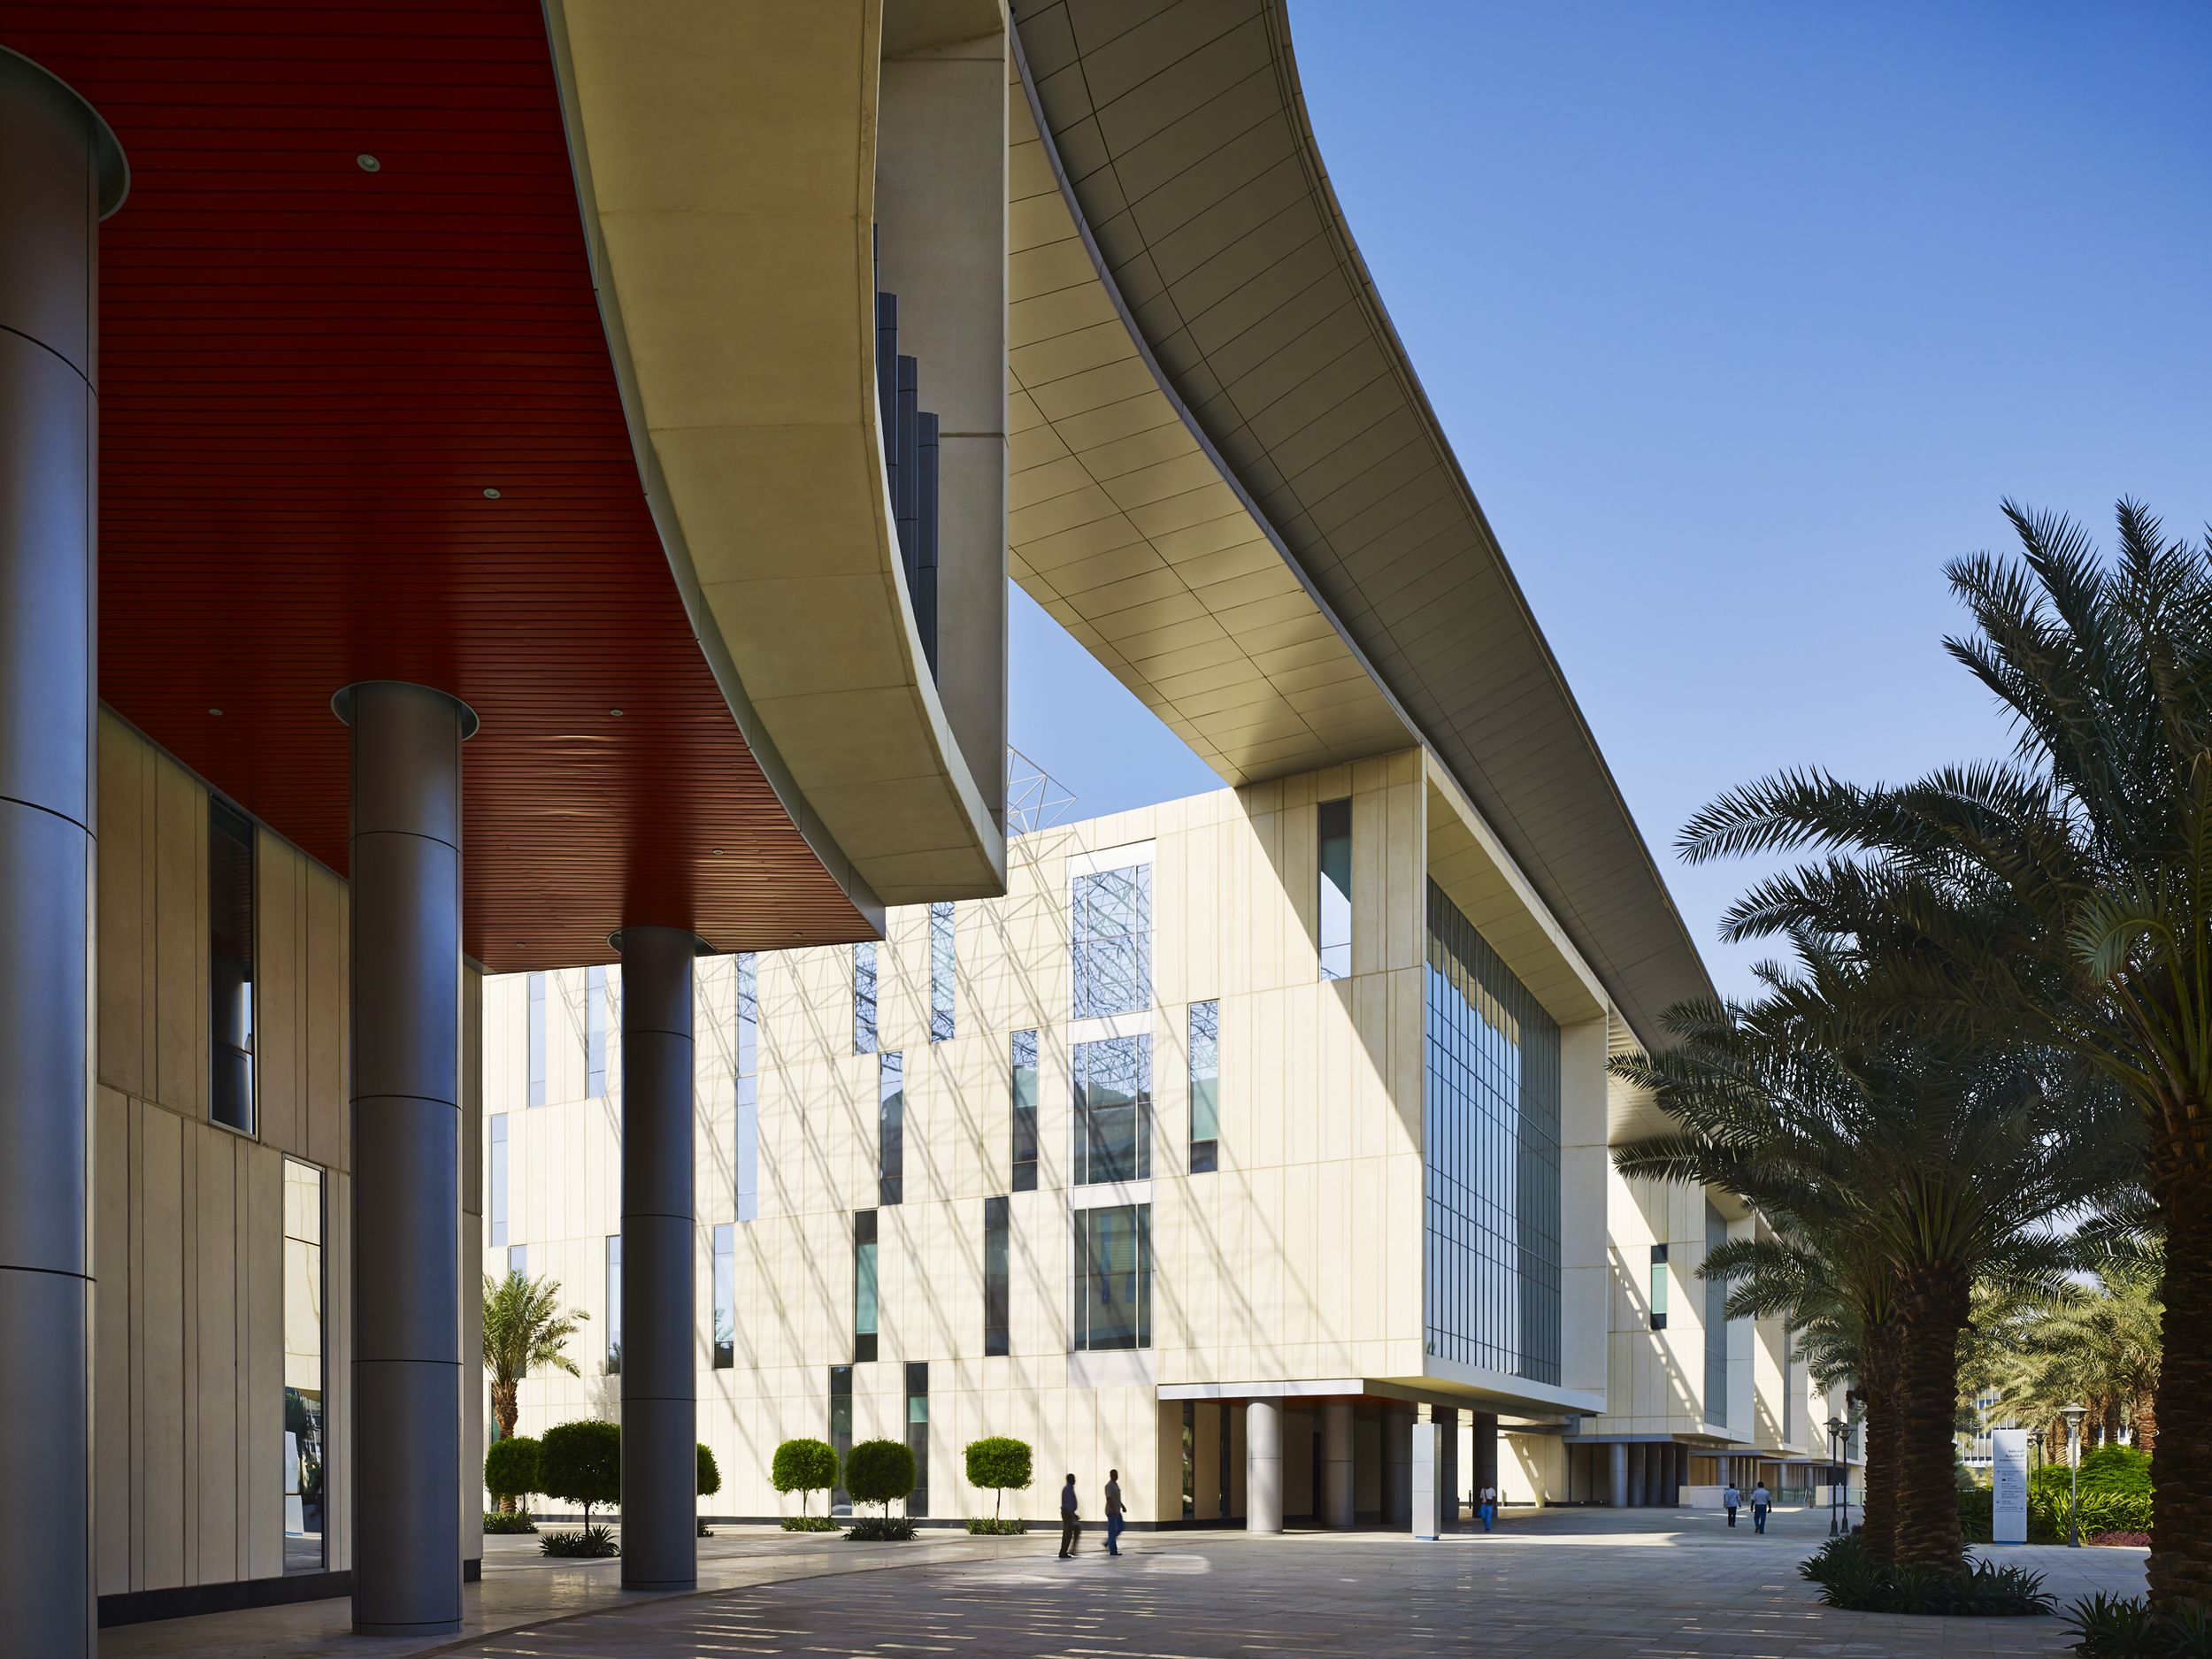  KSAU Jeddah Campus  Perkins &amp; Will | Dar Al Handasah (Shair and Partners)  Jeddah, Saudi Arabia  &nbsp;   Return to Projects  